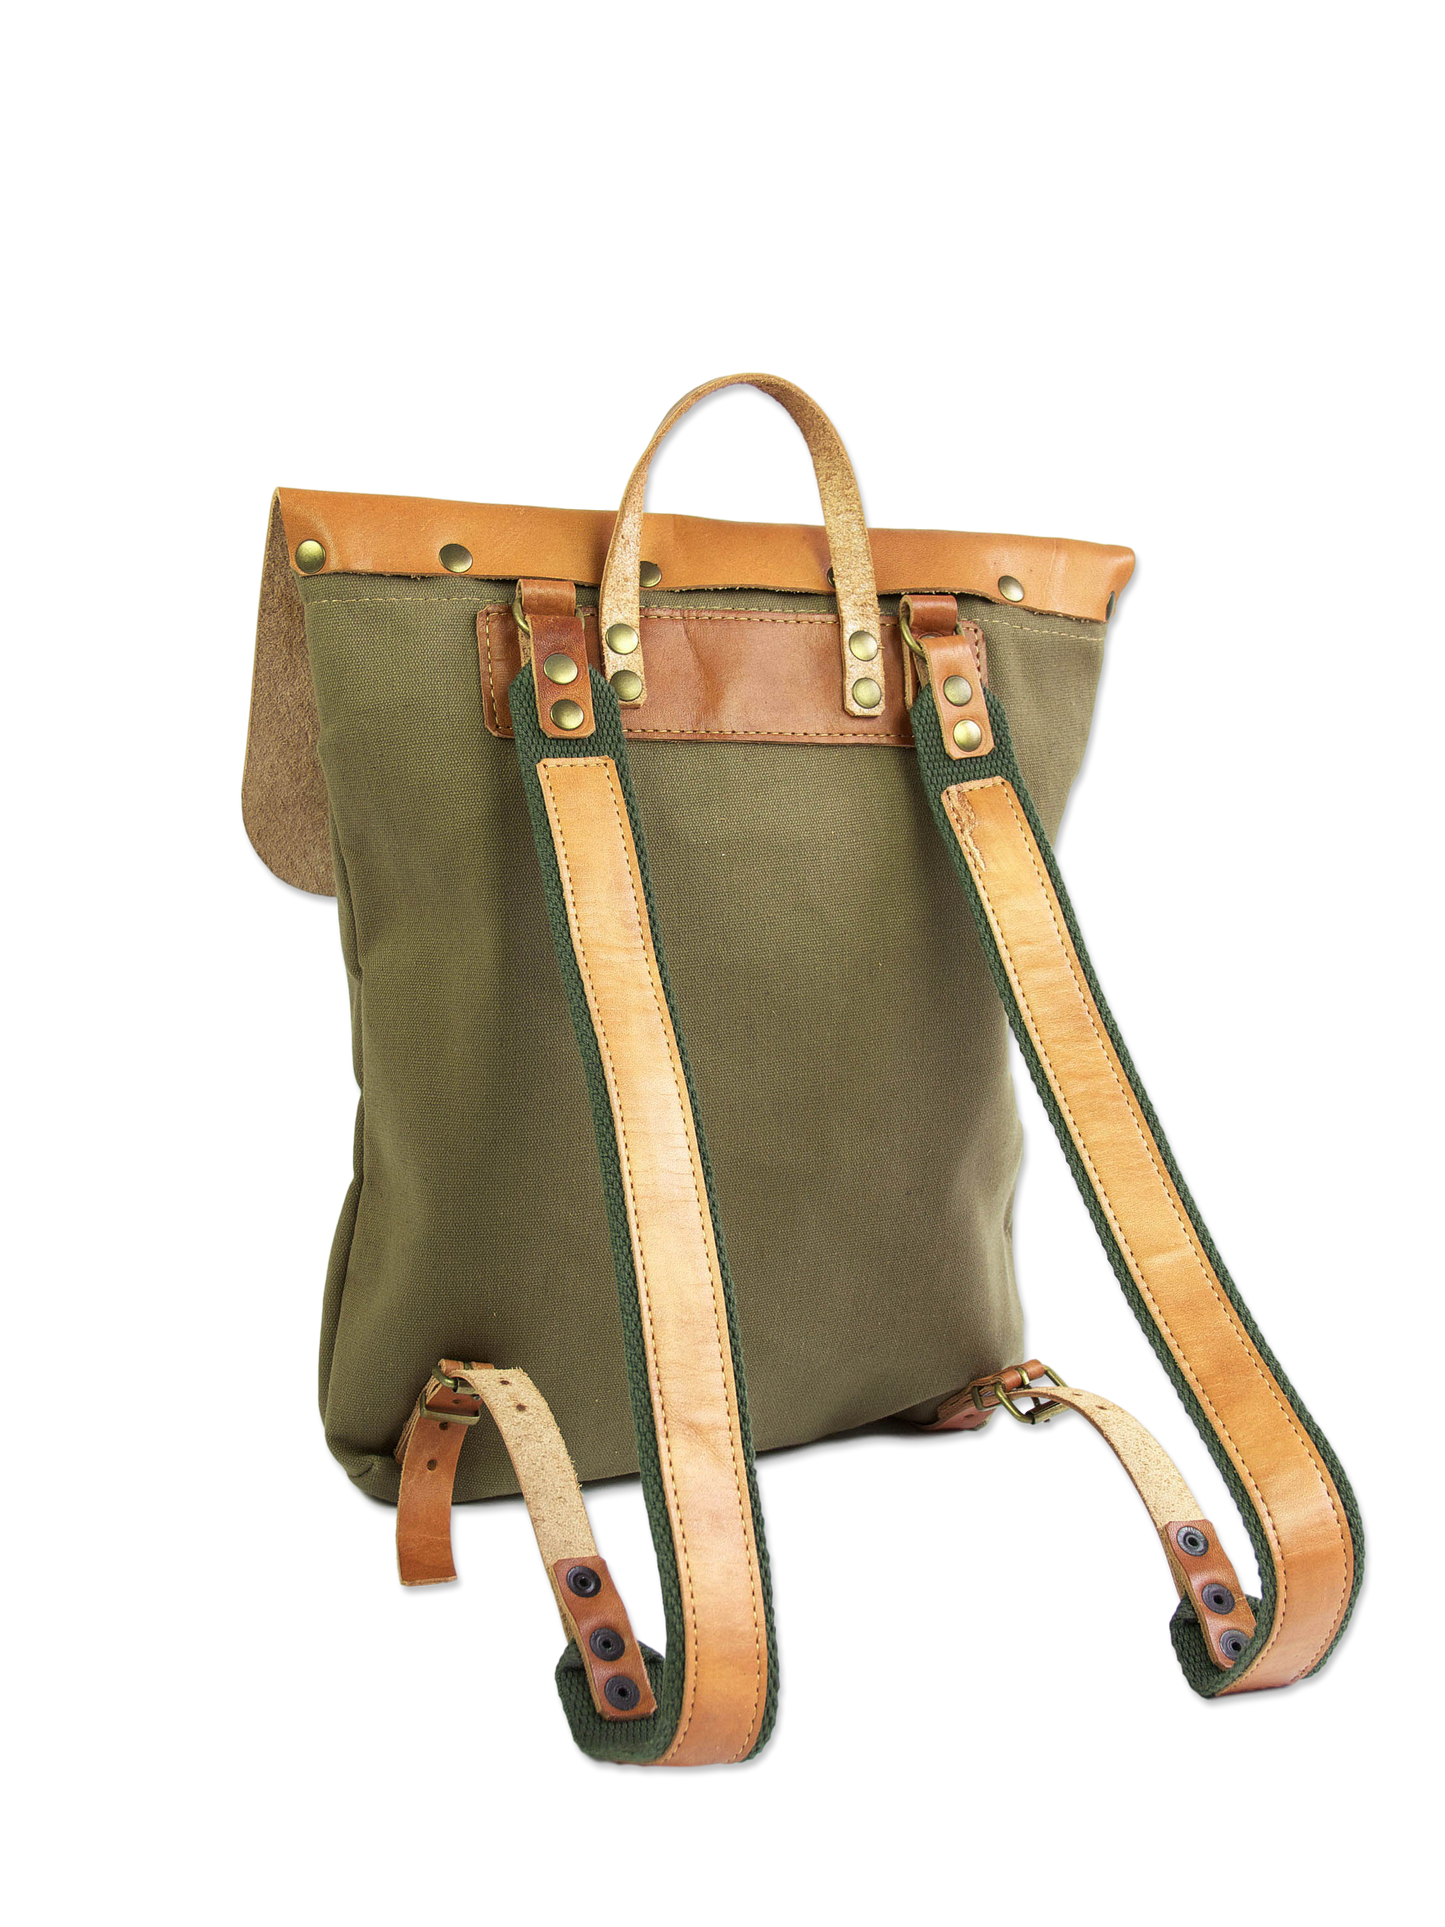 Simple handmade backpack sustainable